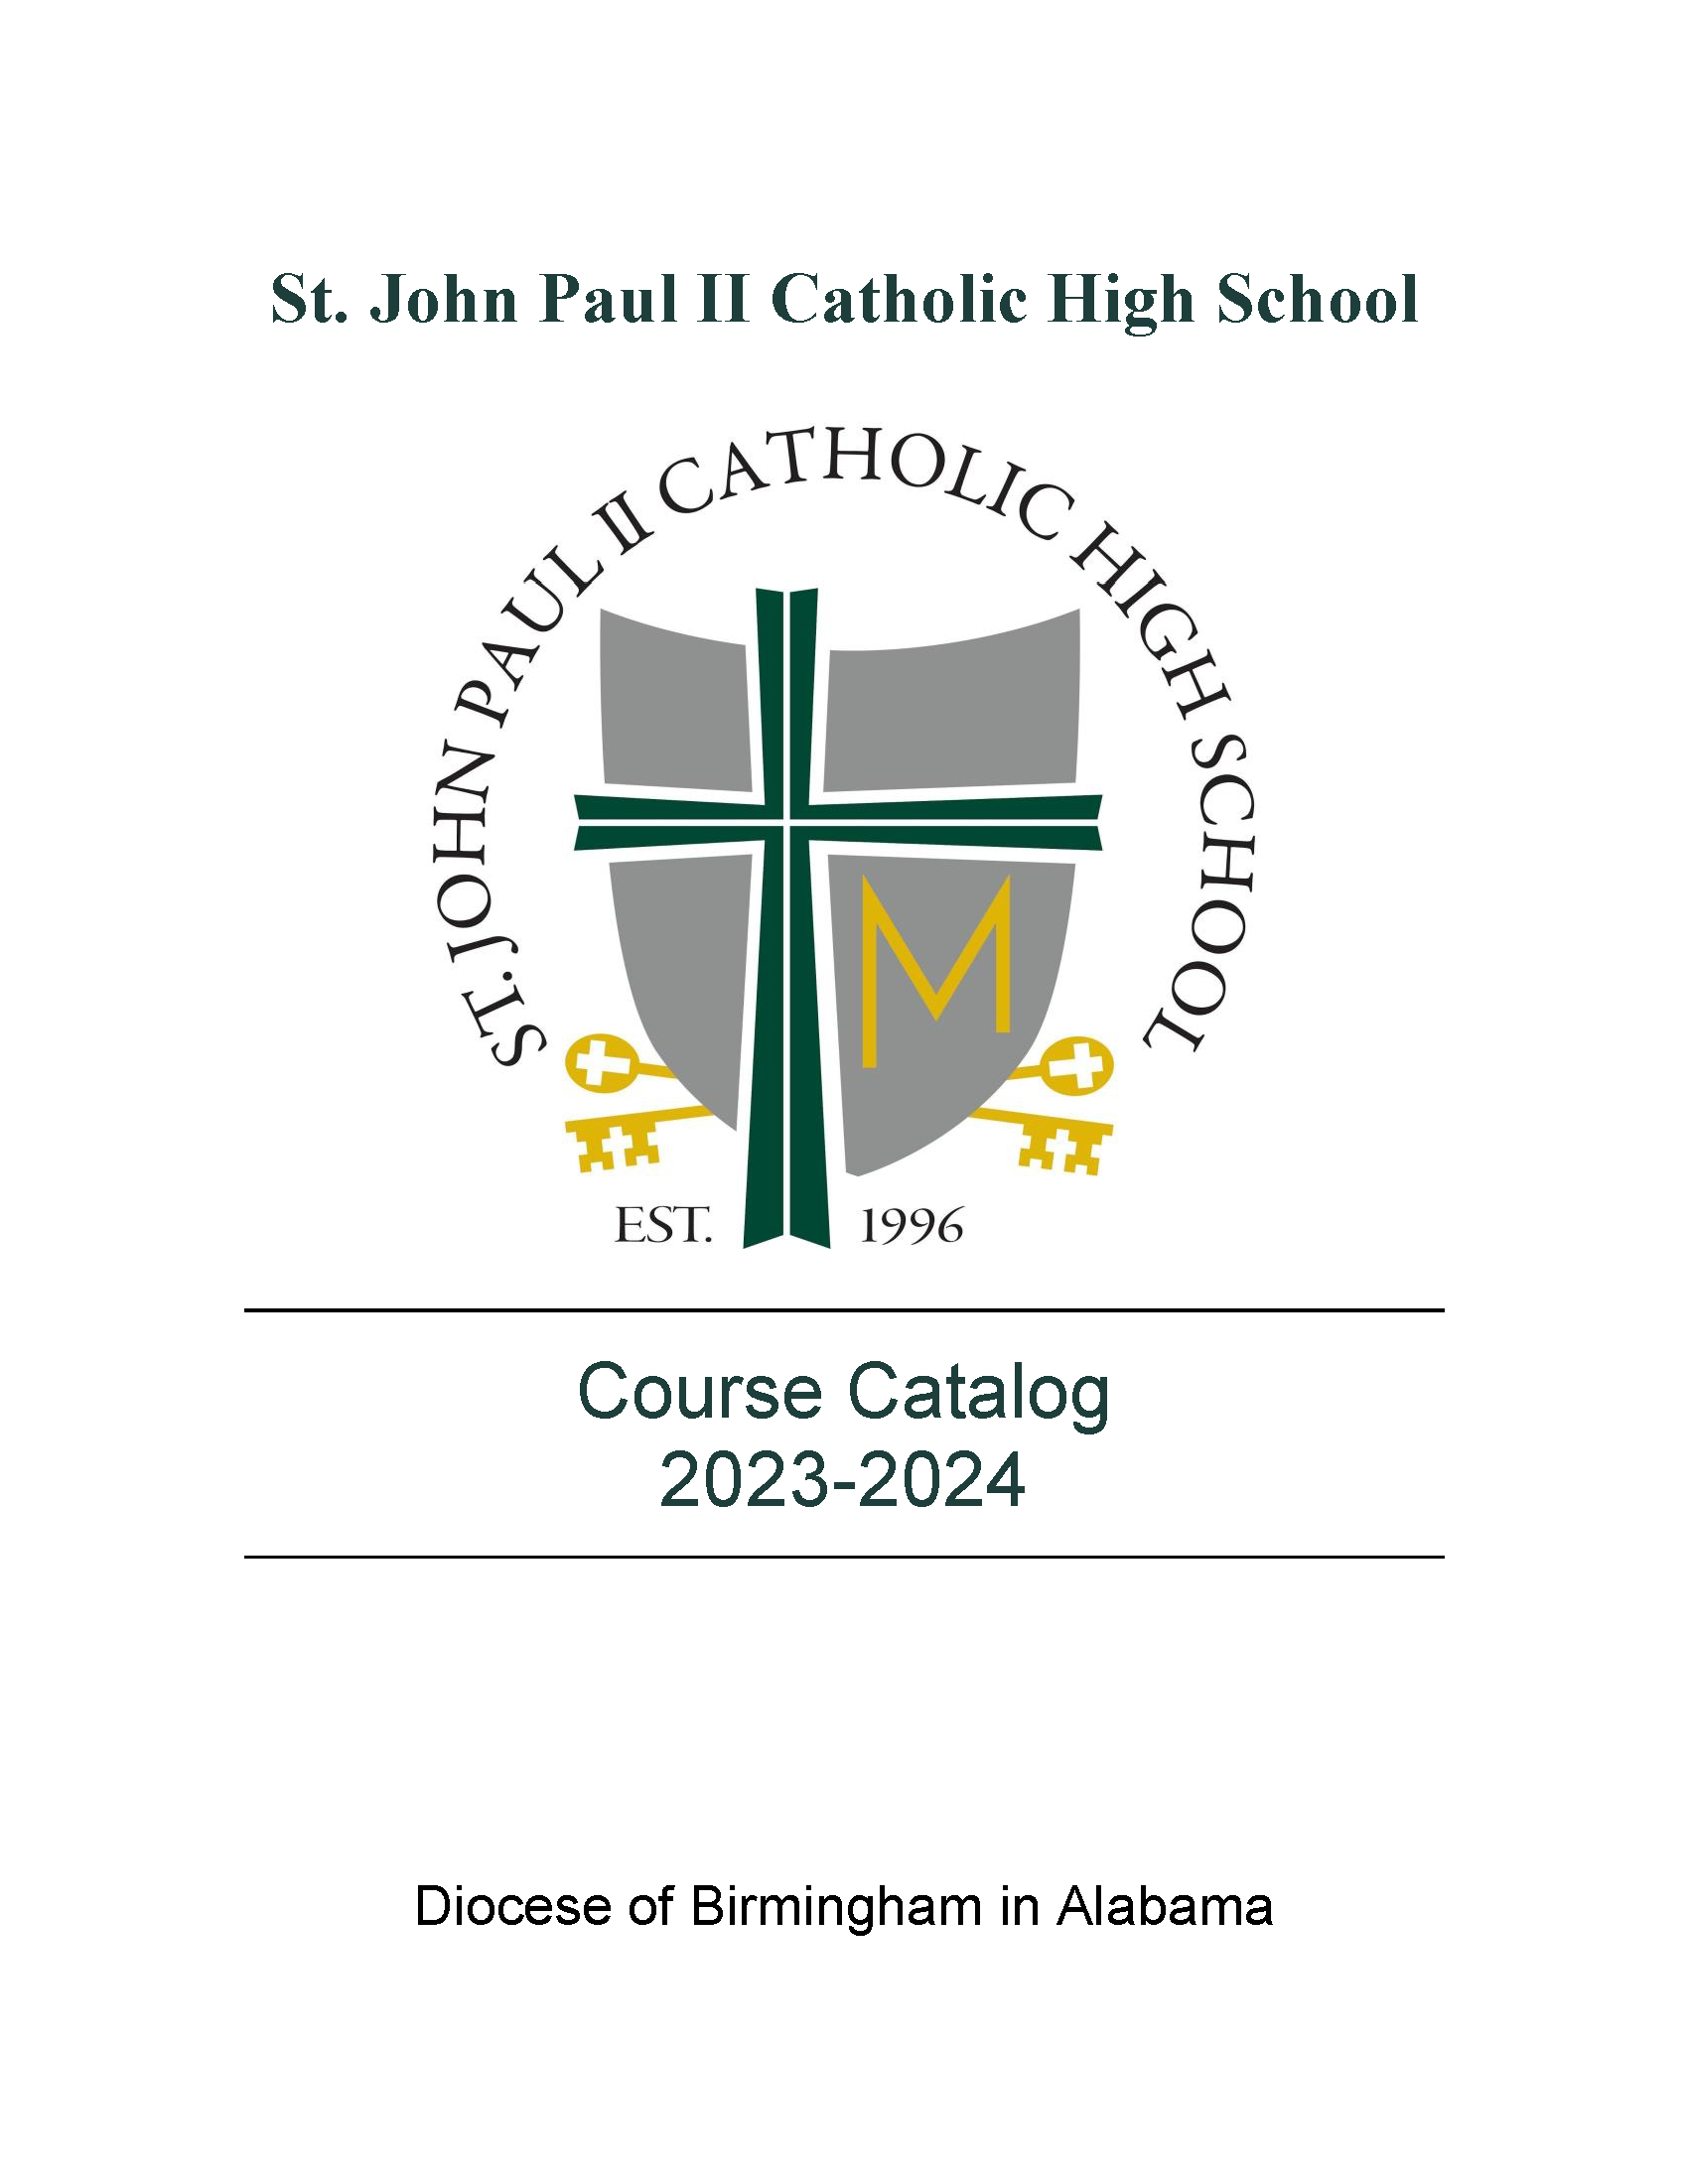 Course Catalog 2023-2024